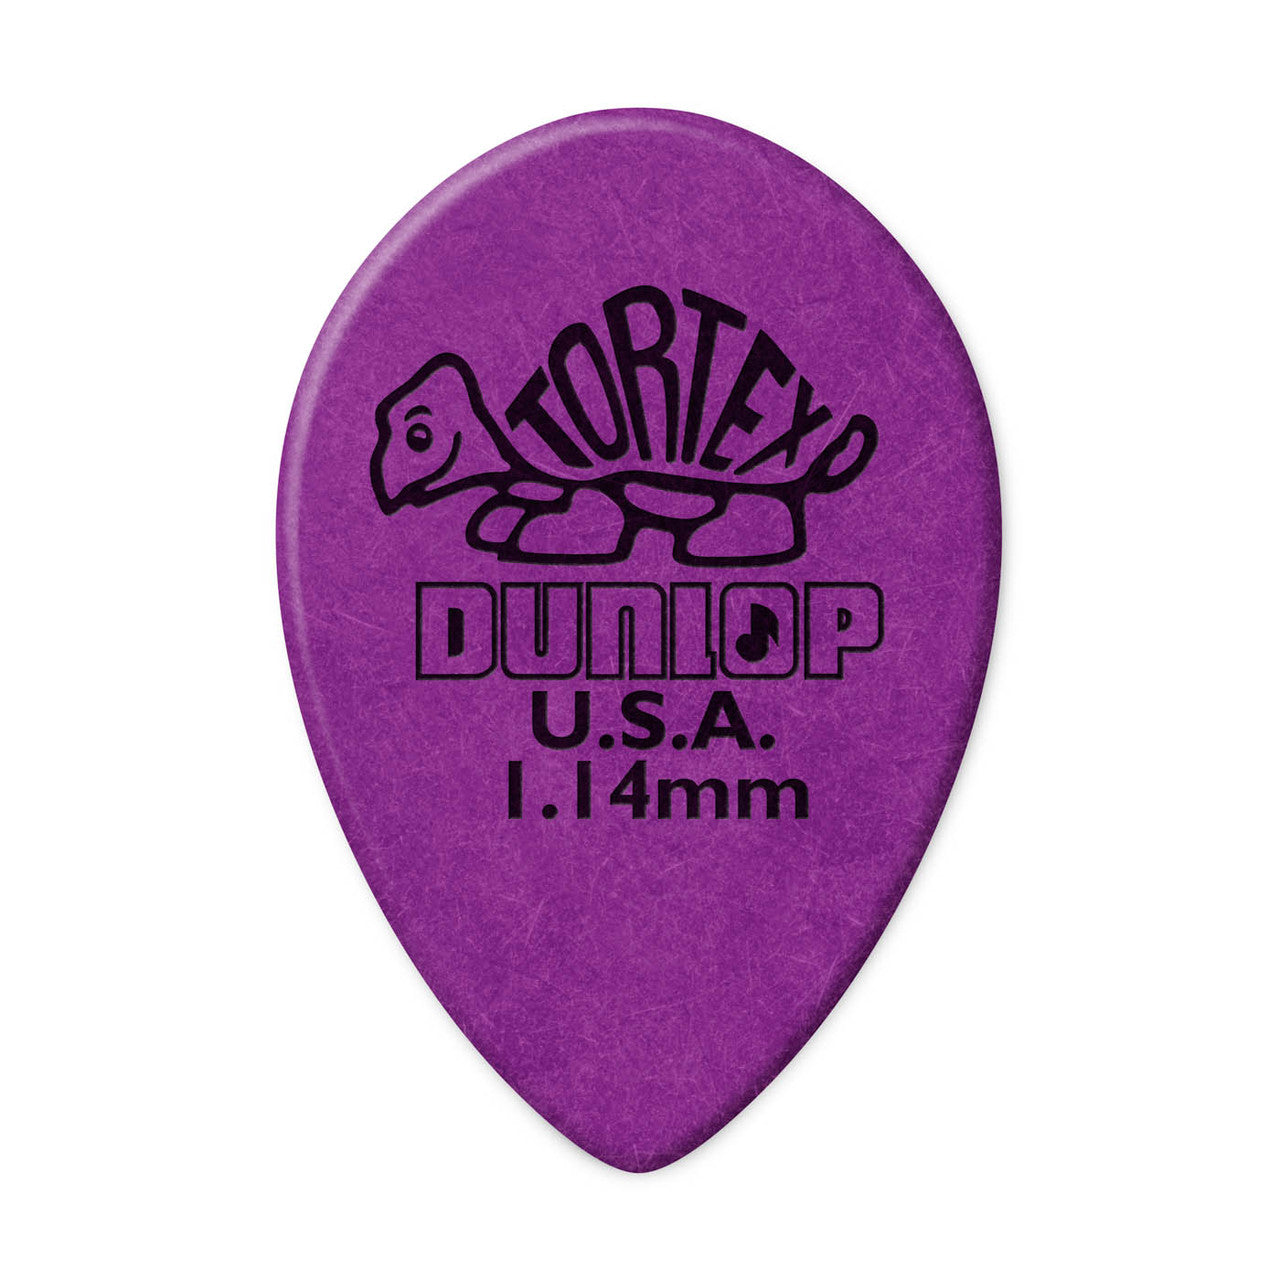 Dunlop Tortex® Small Teardrop Pick 1.14mm